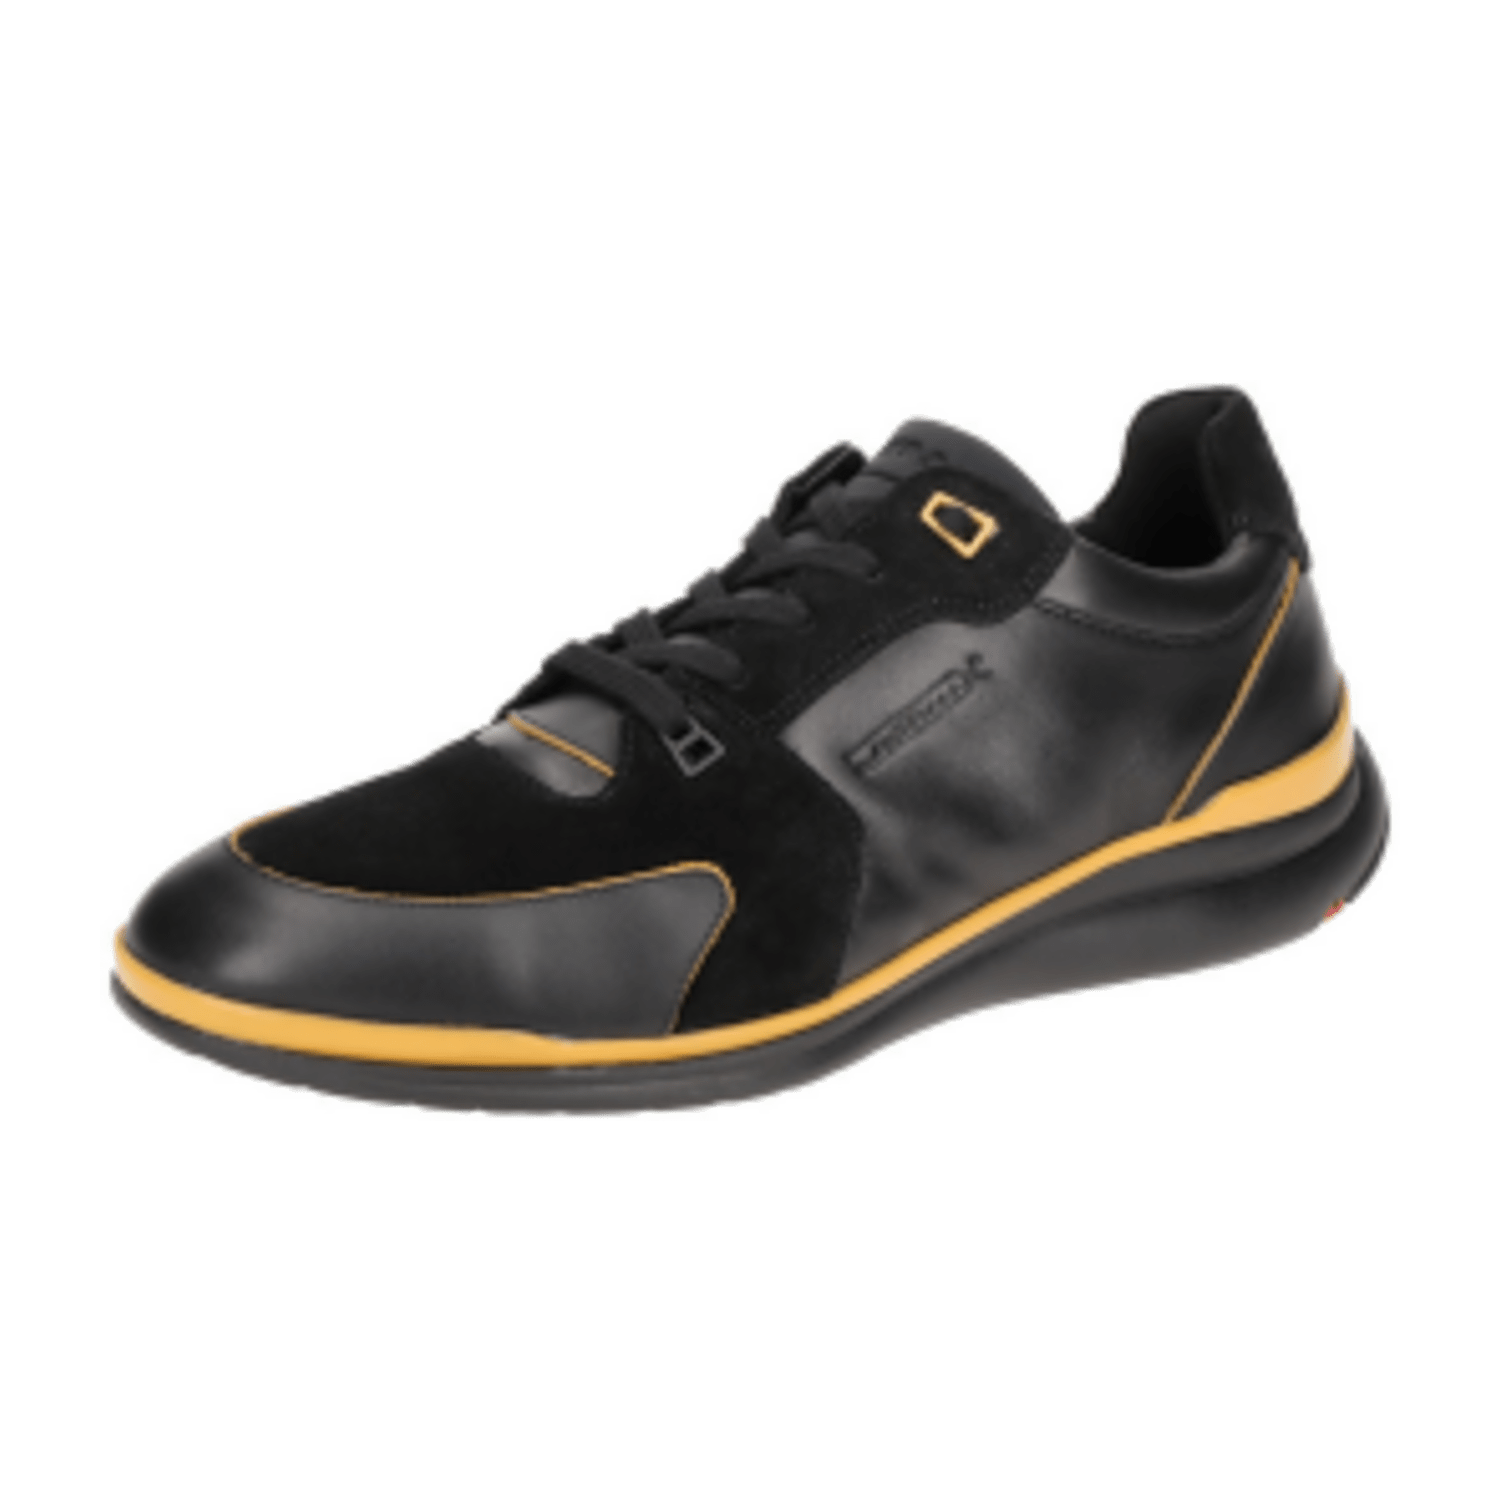 Lloyd Modena Sneakers Schuhe schwarz gelb 20-713-52